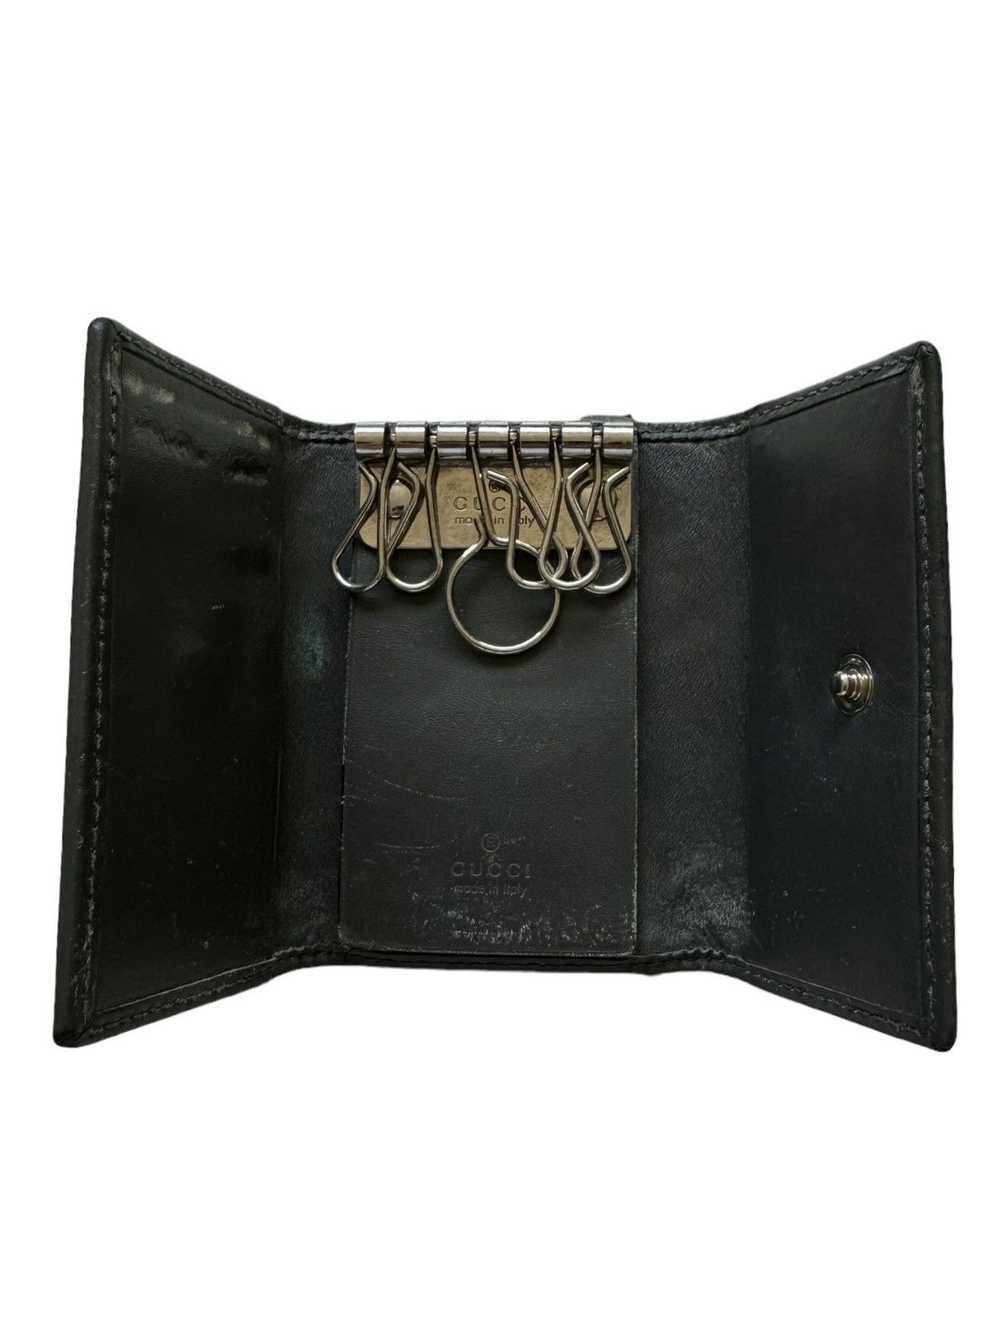 Gucci Gucci Monogram Leather Key Case - image 3